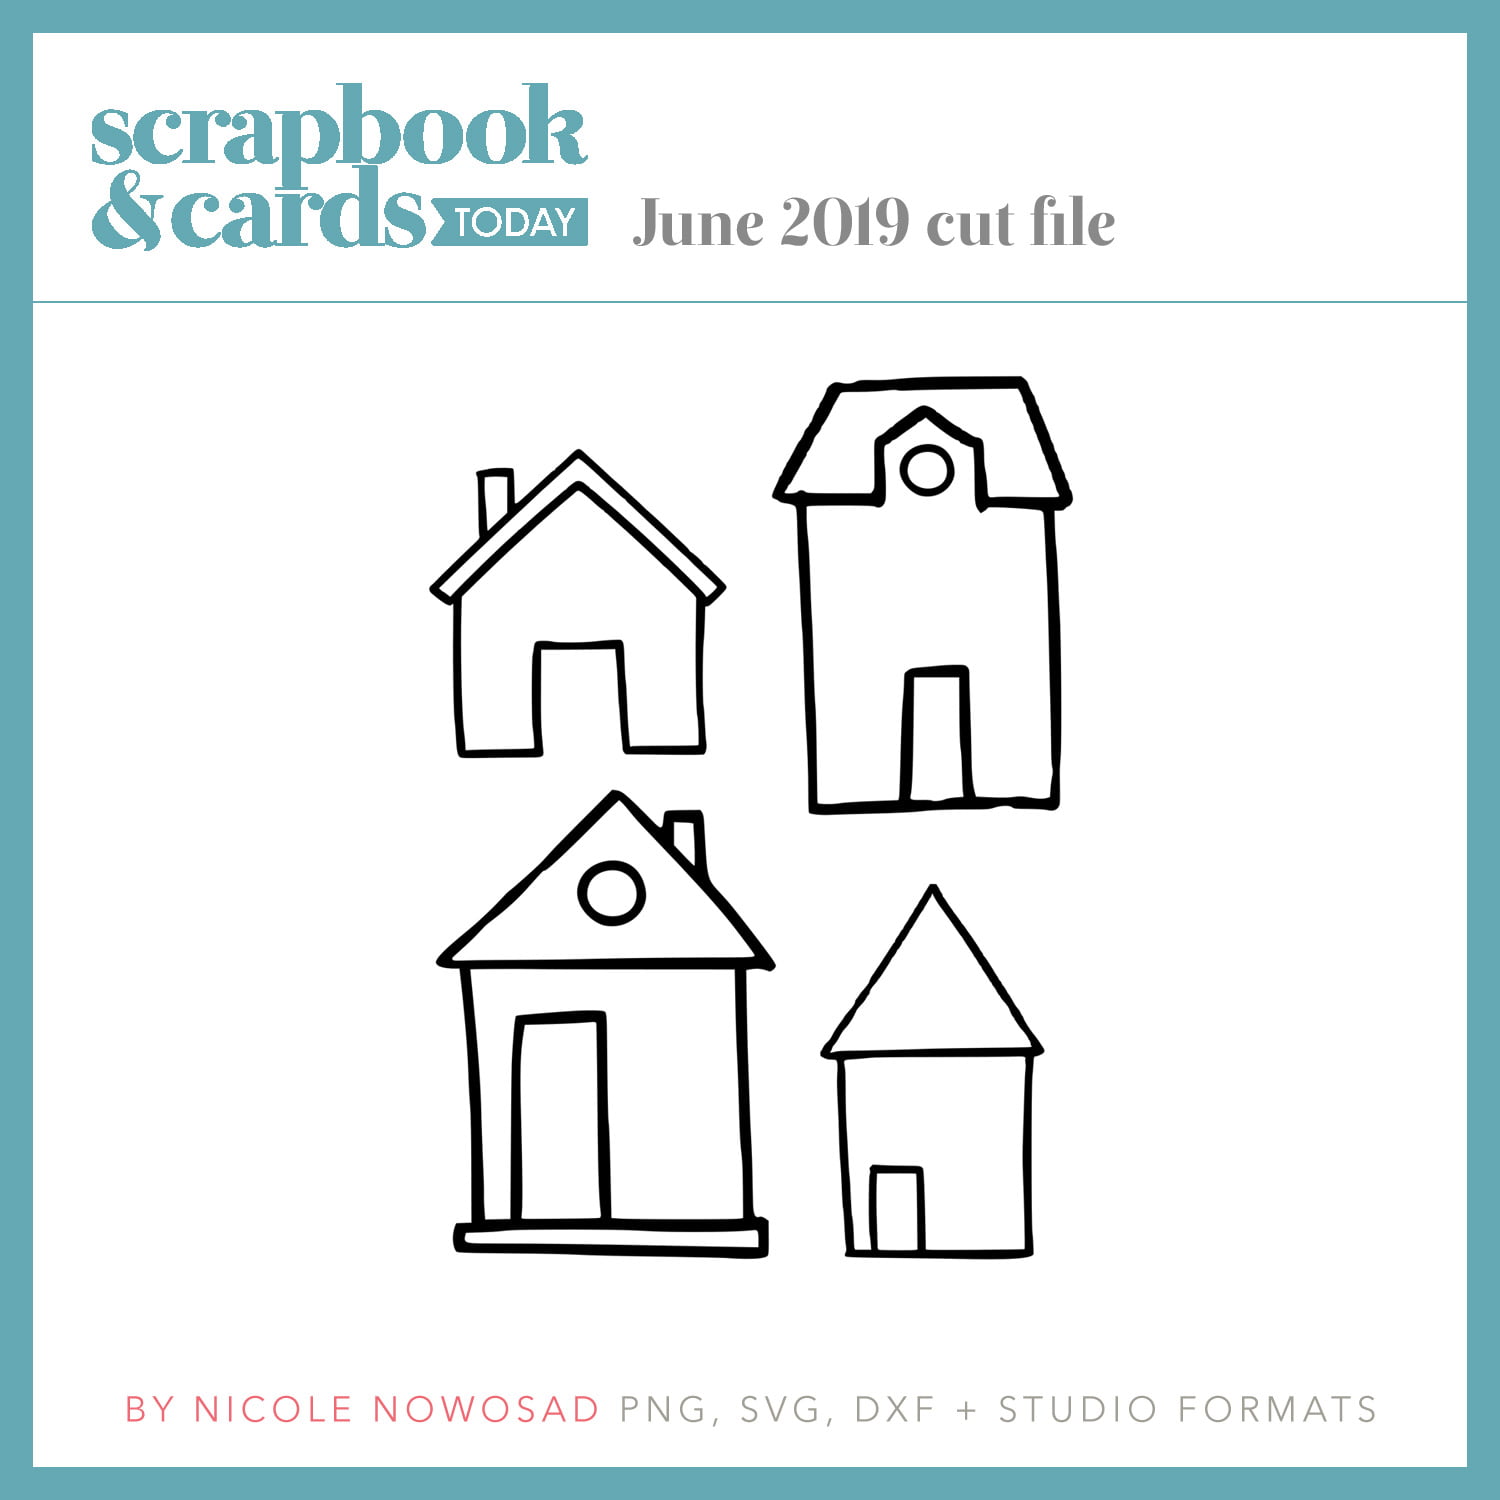 Scrapbook & Cards Today June 2019 free cut file